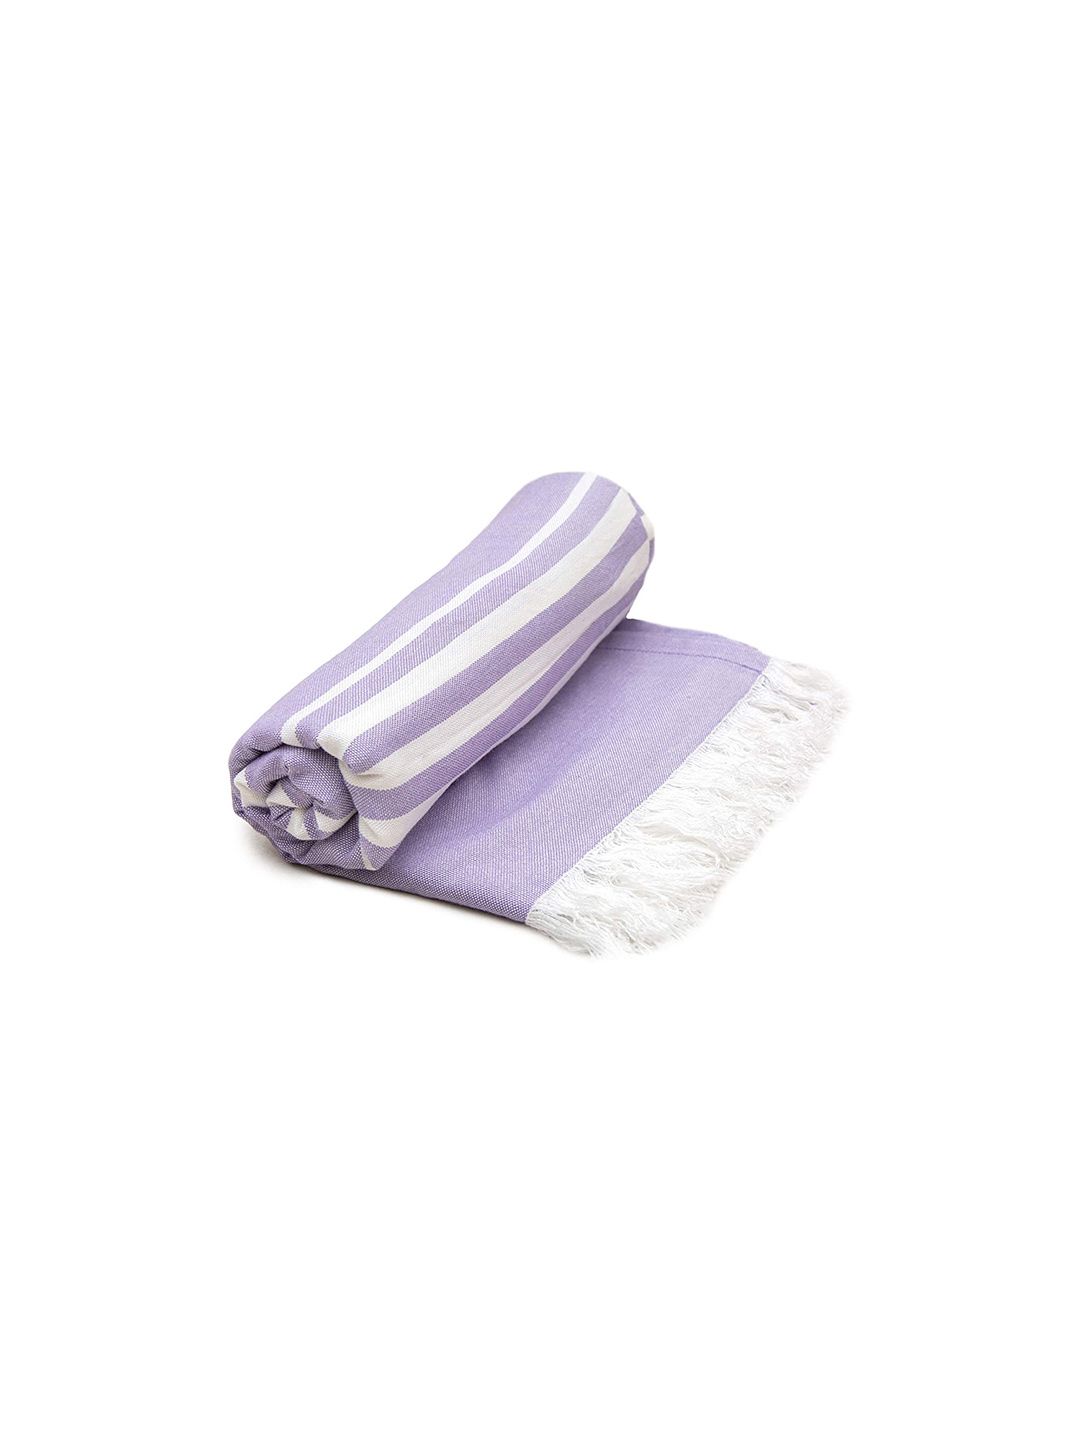 MUSH Lavender & White Striped 300 GSM Quick Dry Turkish Bath Towel Price in India